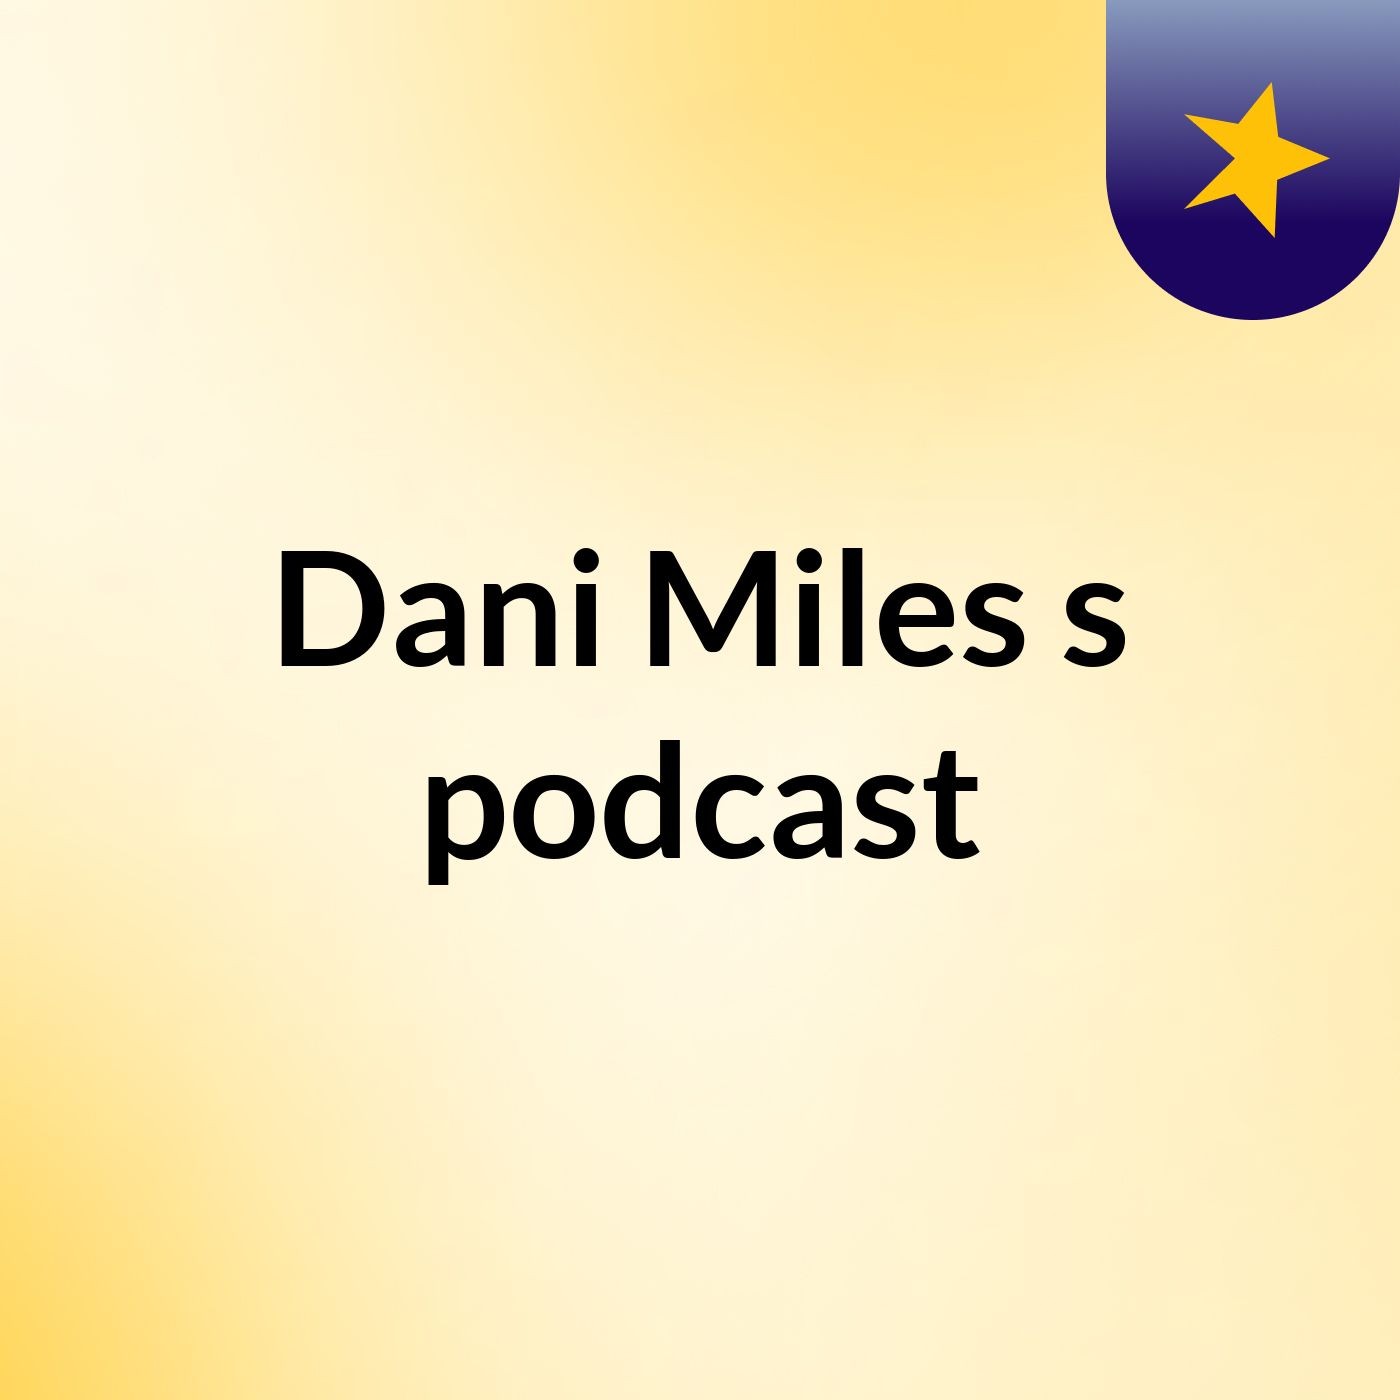 Dani Miles's podcast